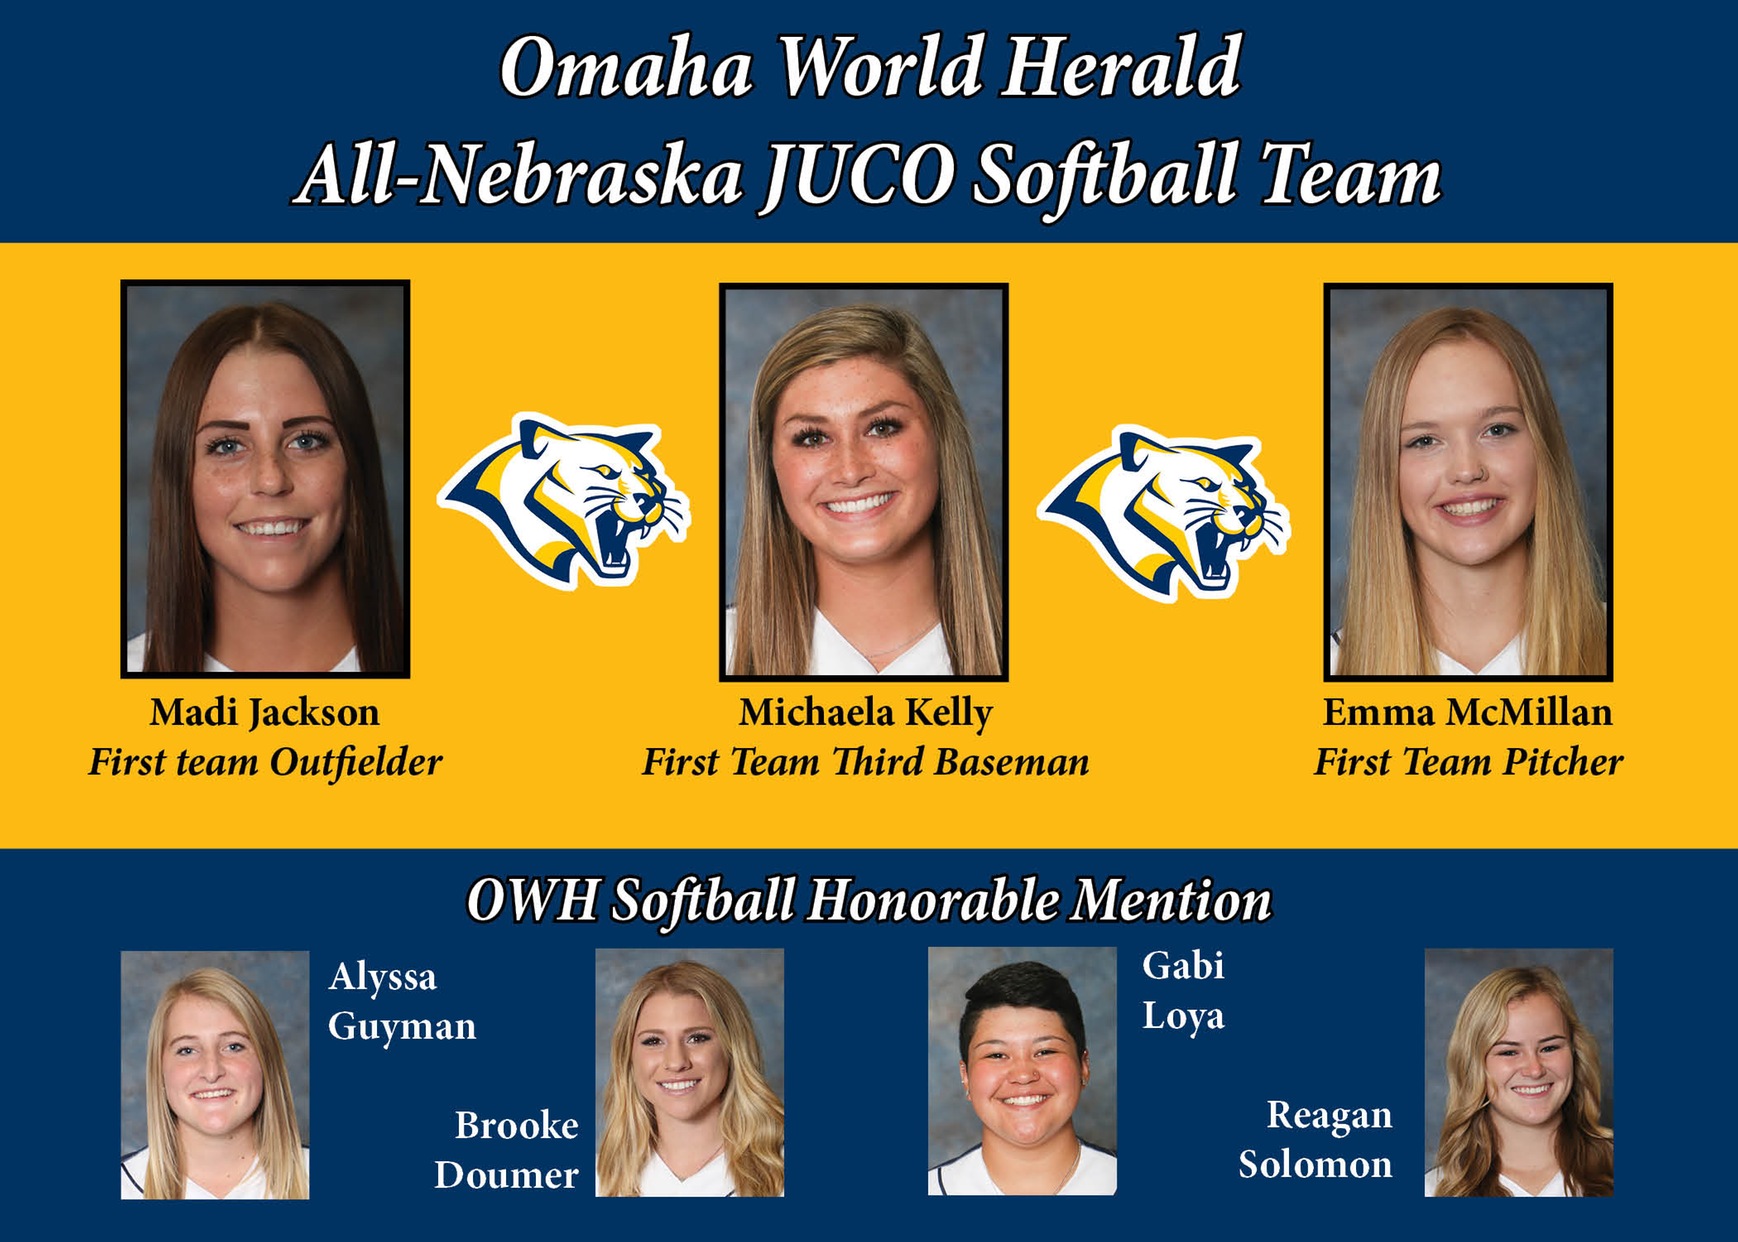 Three WNCC softball players earn OWH All-Nebraska First Team honors